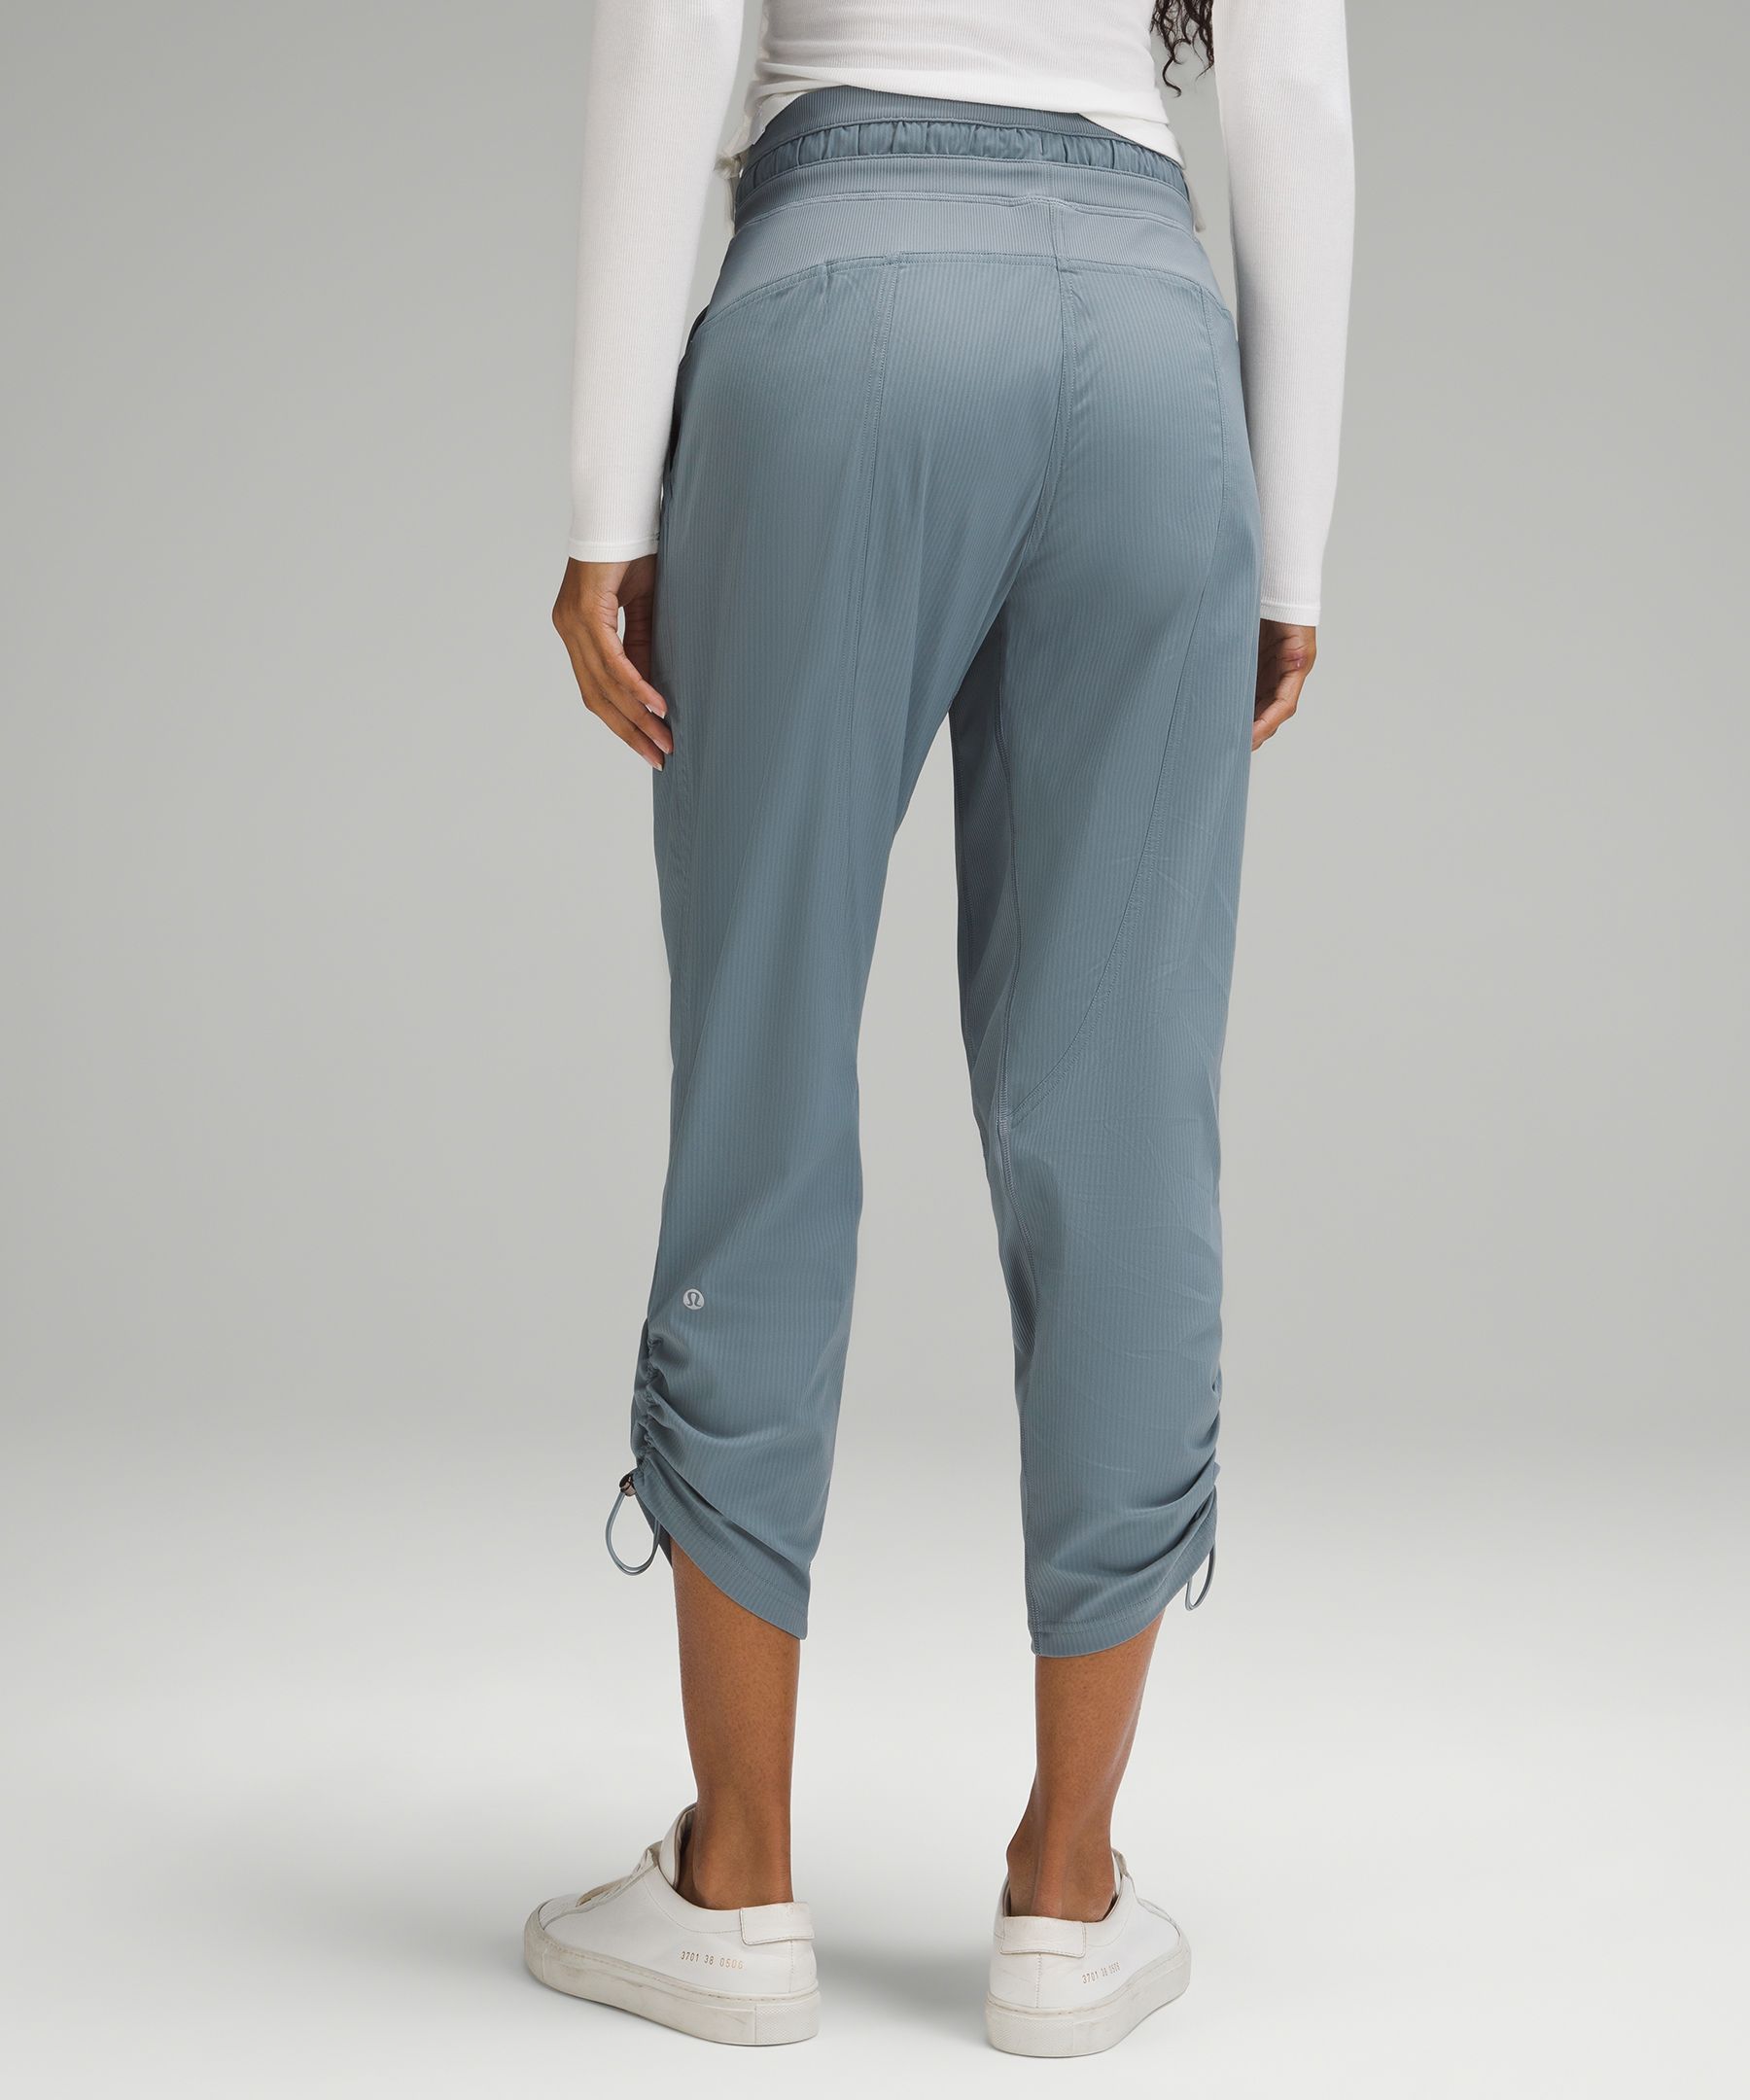 Lululemon Dance Studio Mid-Rise Crop Pants - Retail $98